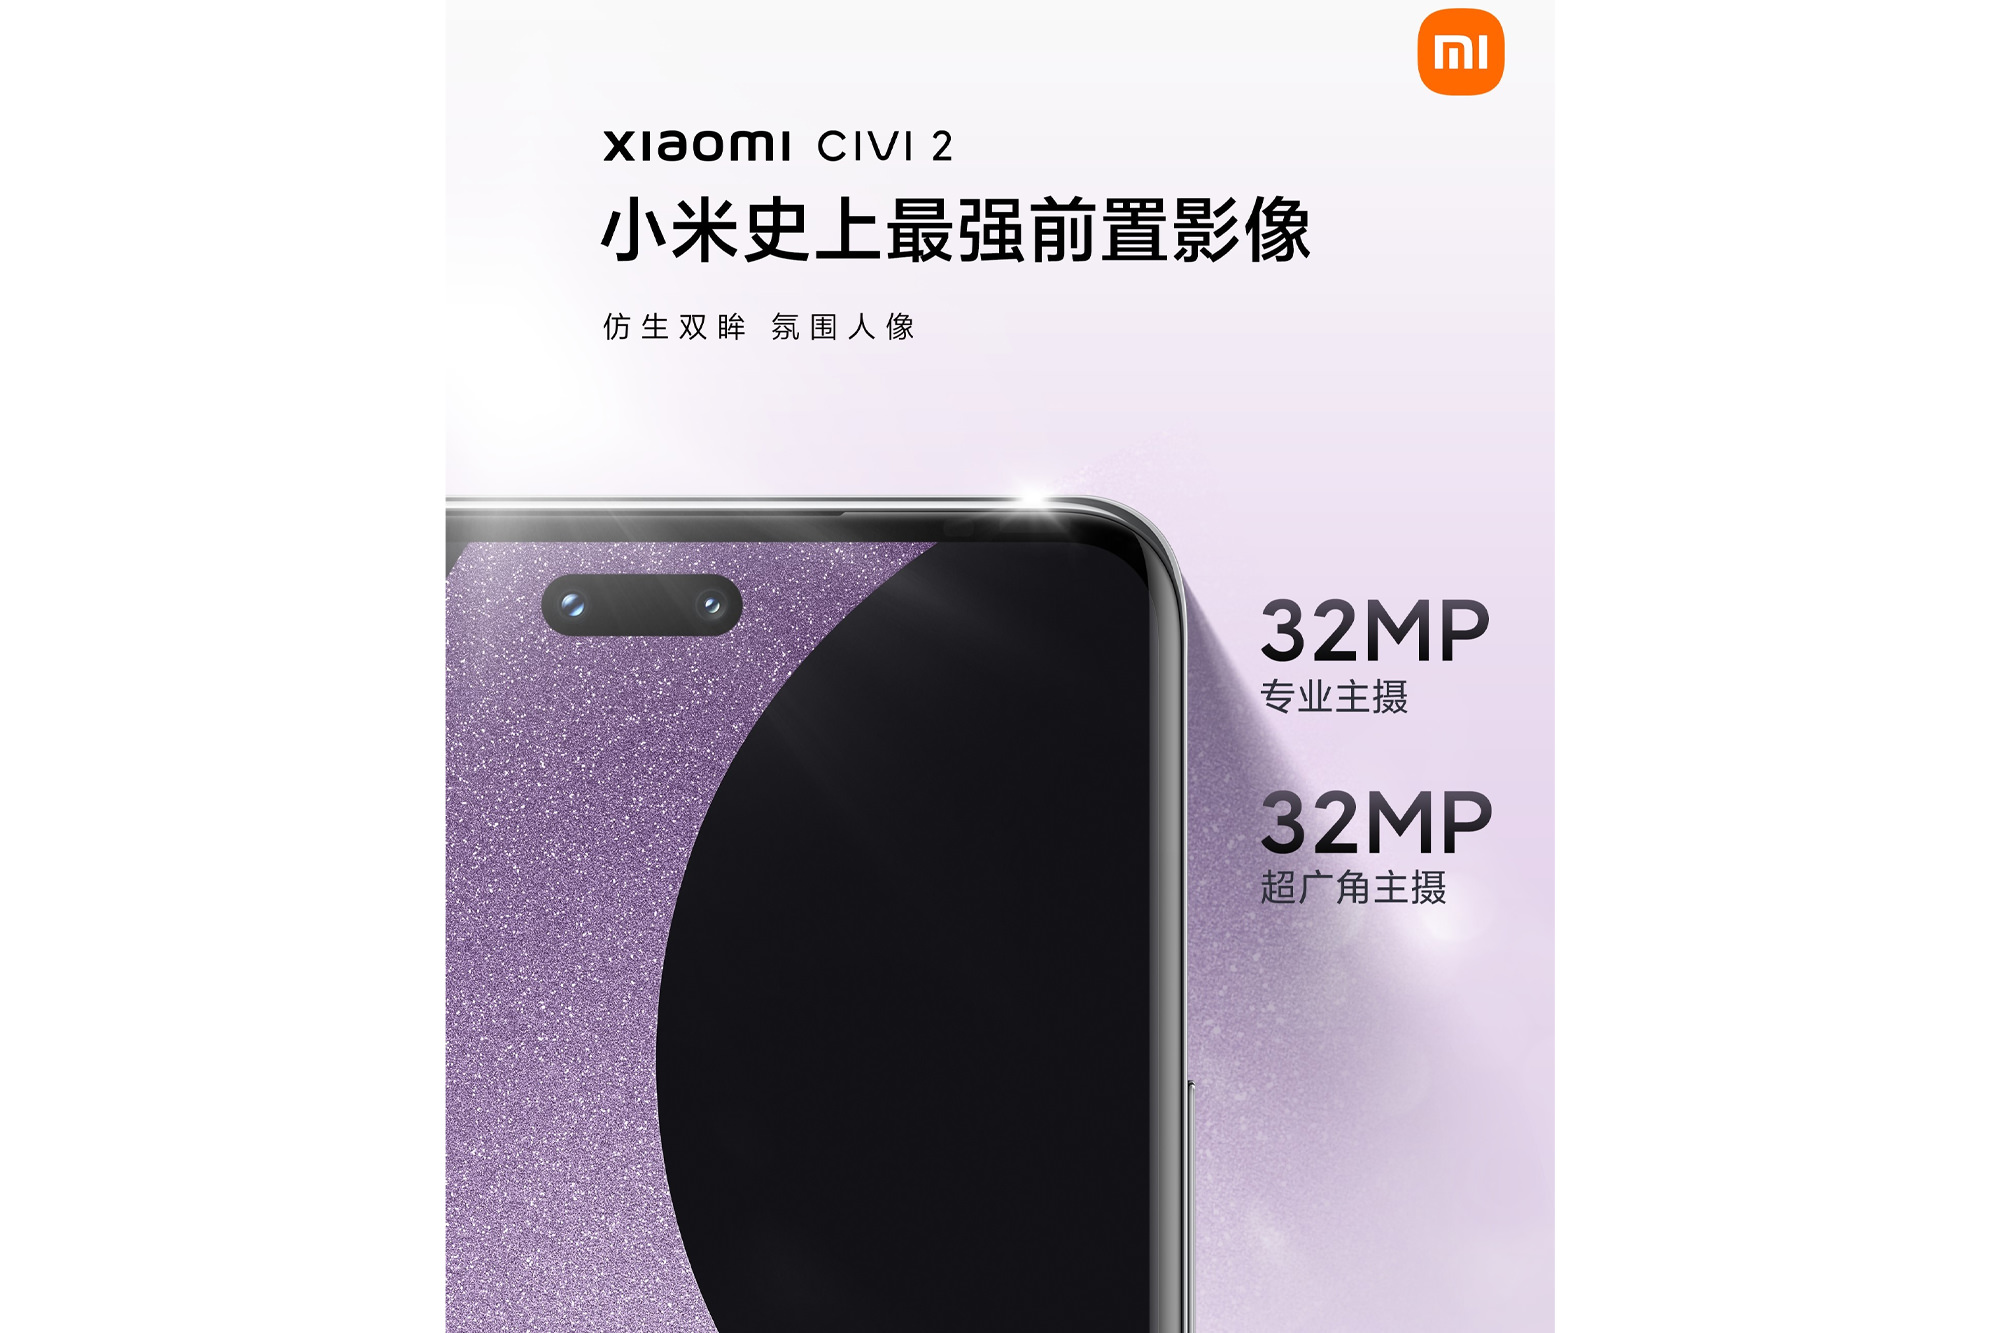 مشخصات دوربین سلفی گوشی شیائومی سیوی ۲ / Xiaomi Civi 2